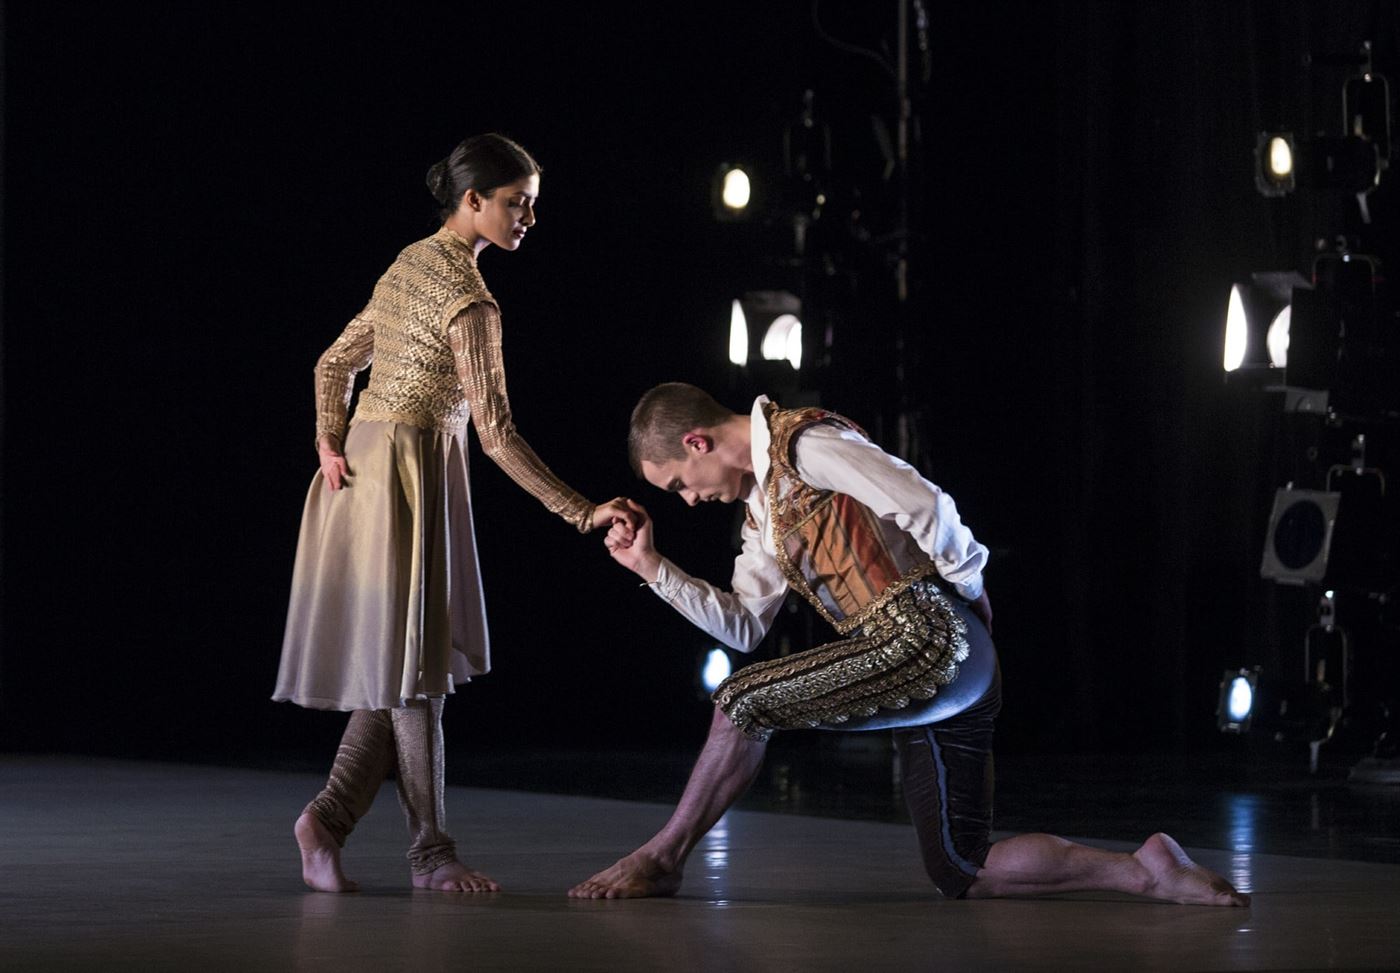 Vidya Patel and Liam Riddick in ‘An Italian in Madrid’ choreographed by Richard Alston. Photo courtesy Marina Levitskaya